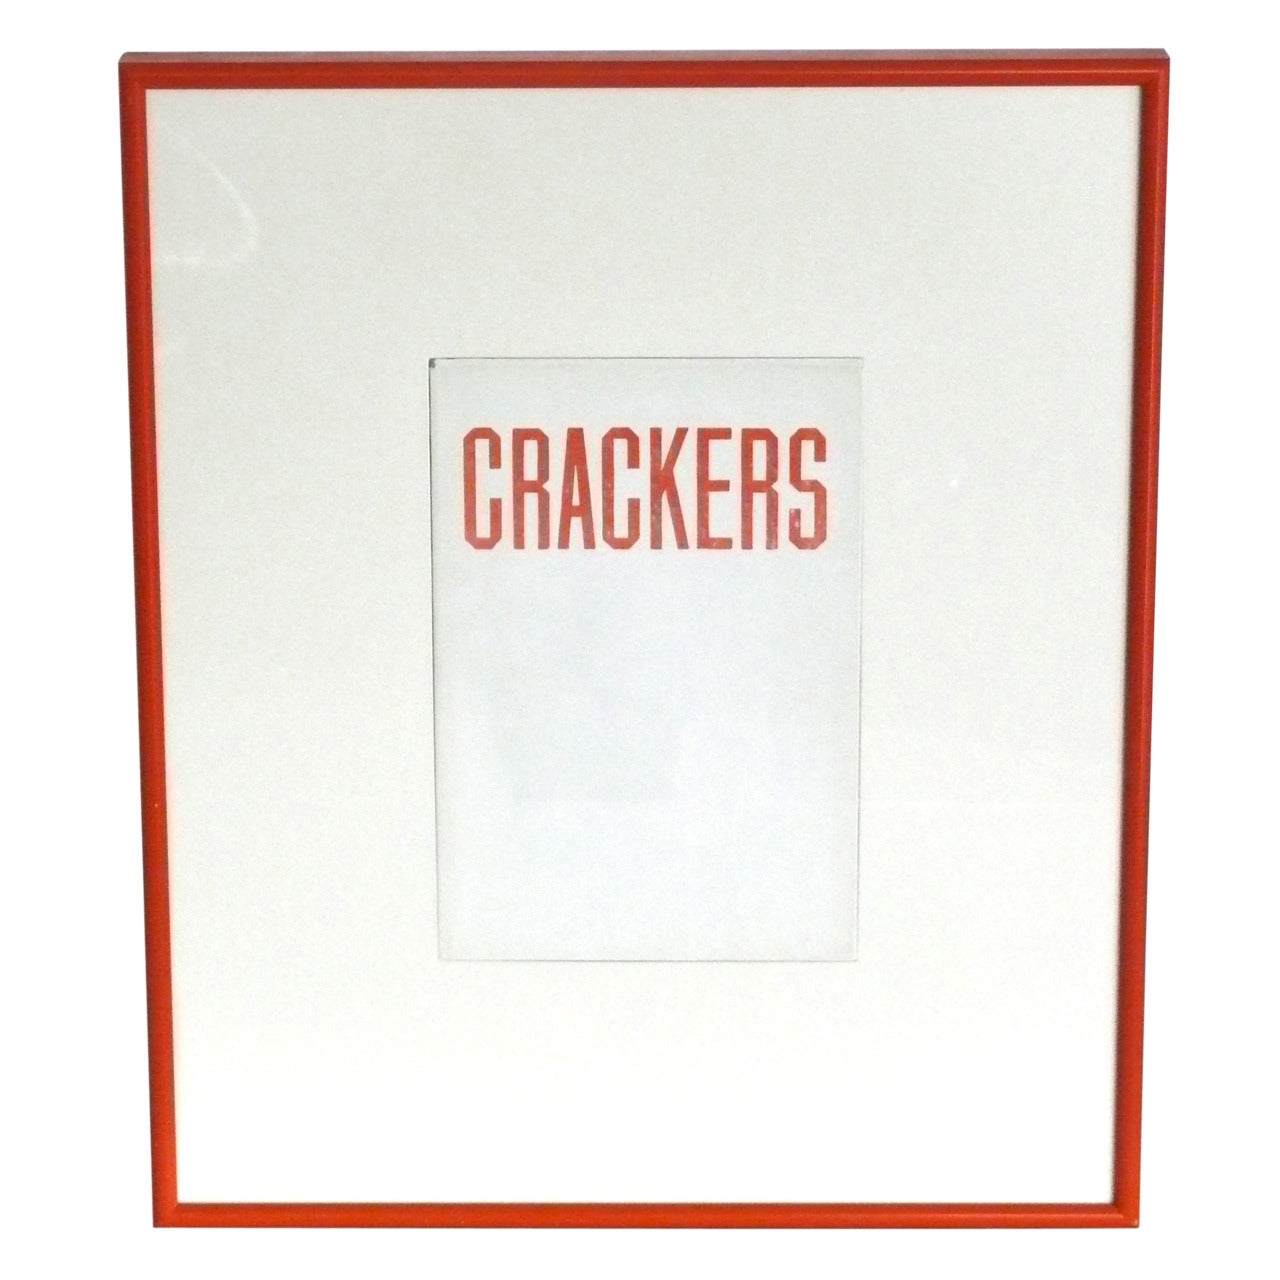 Ed Ruscha "Crackers" Book